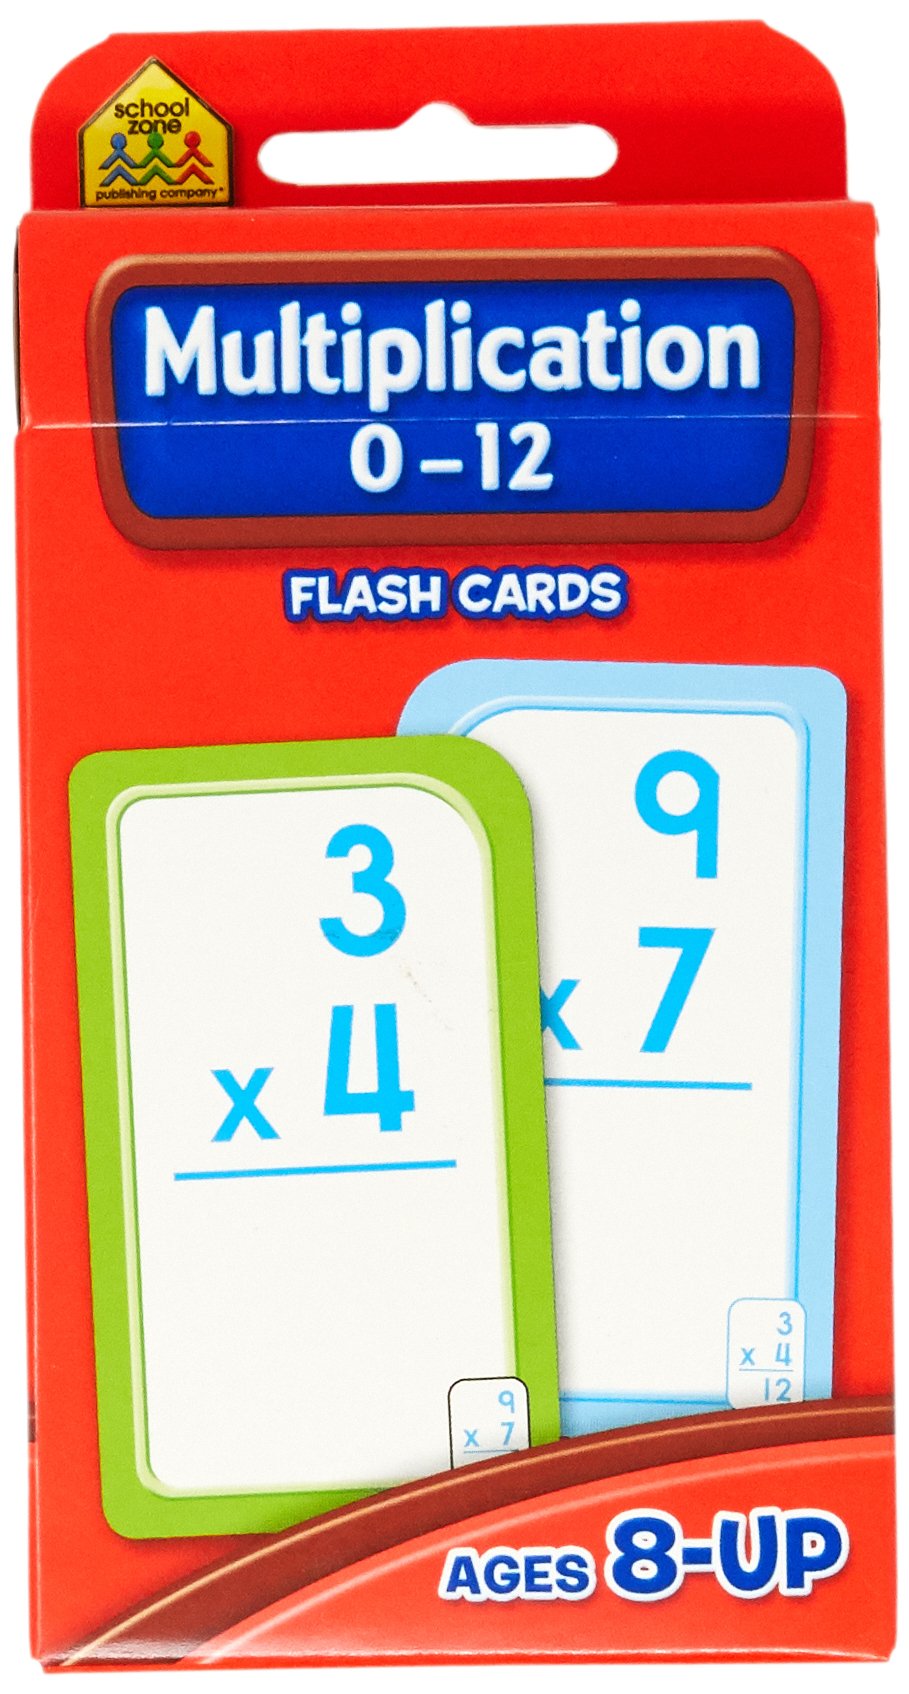 School Zone: Multiplication 0-12 Flash Cards